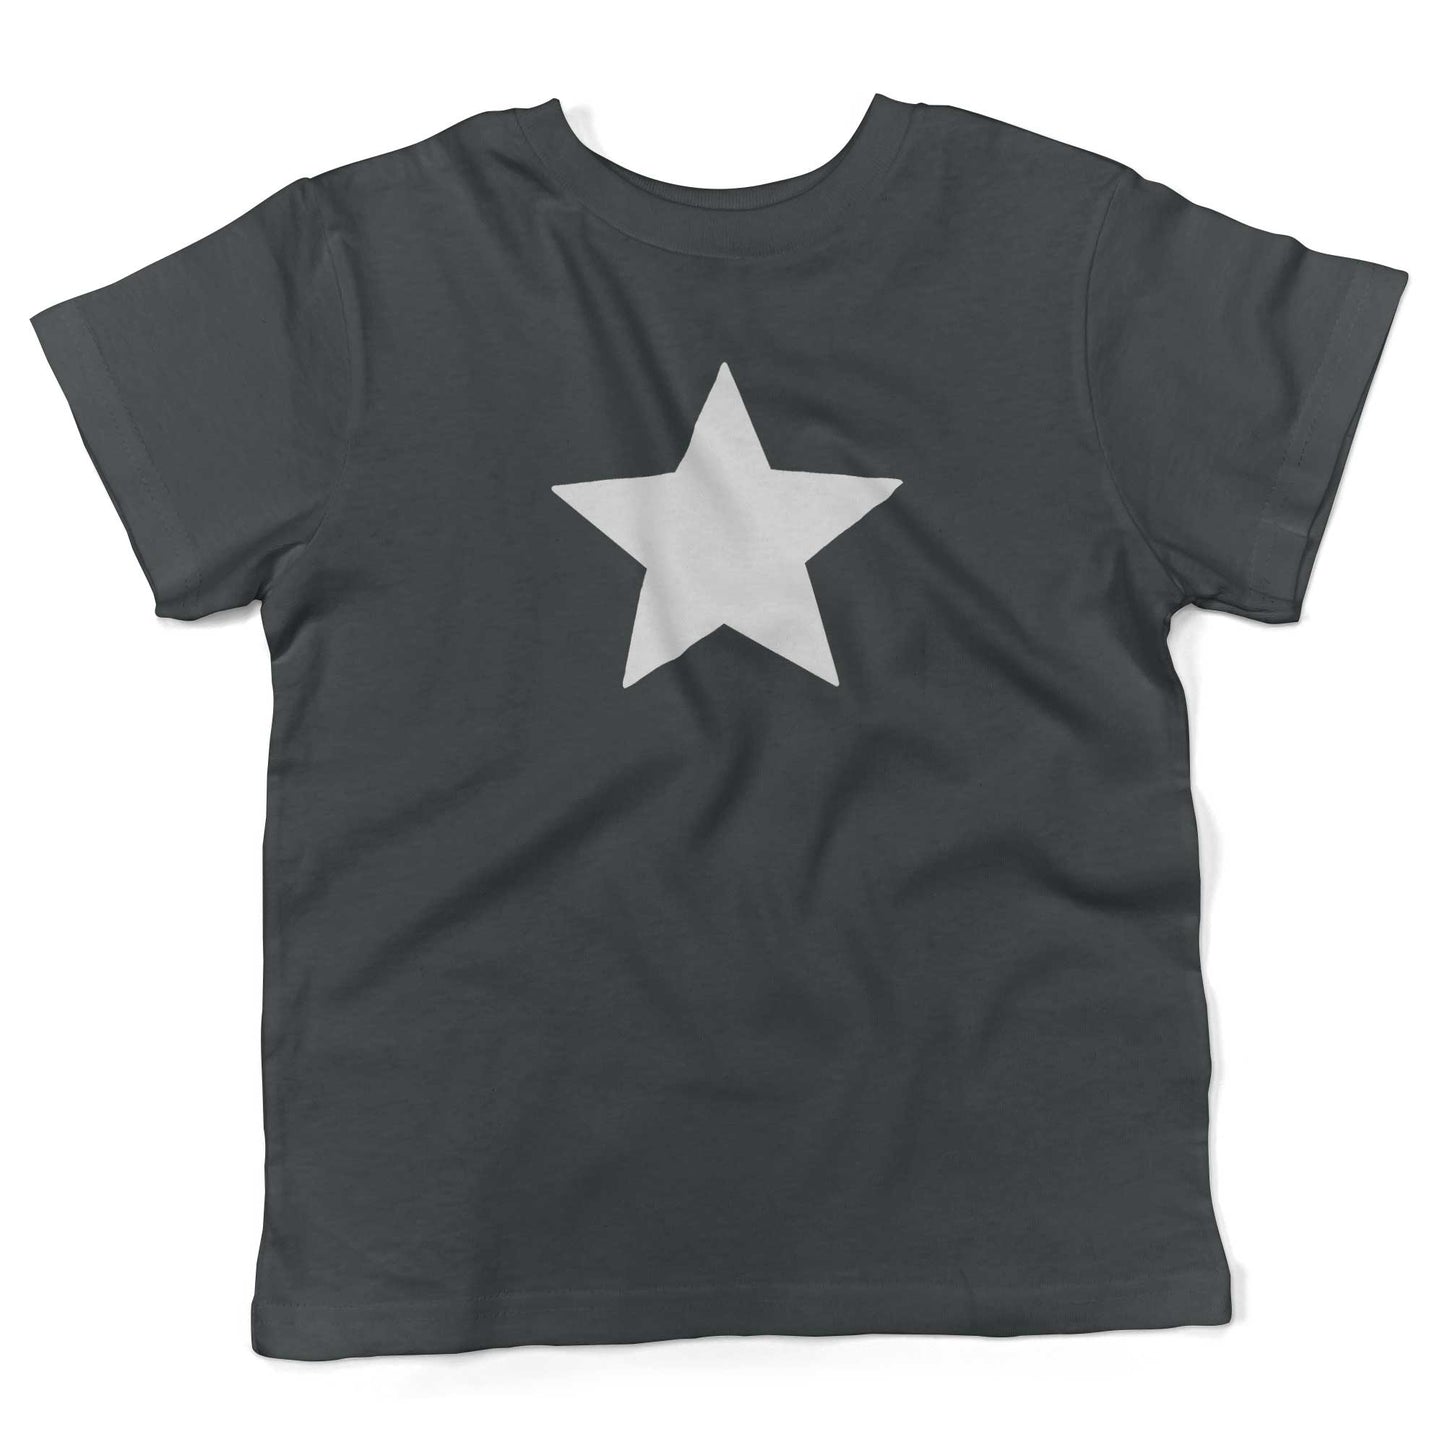 Five-Point Star Toddler Shirt-Asphalt-White Star